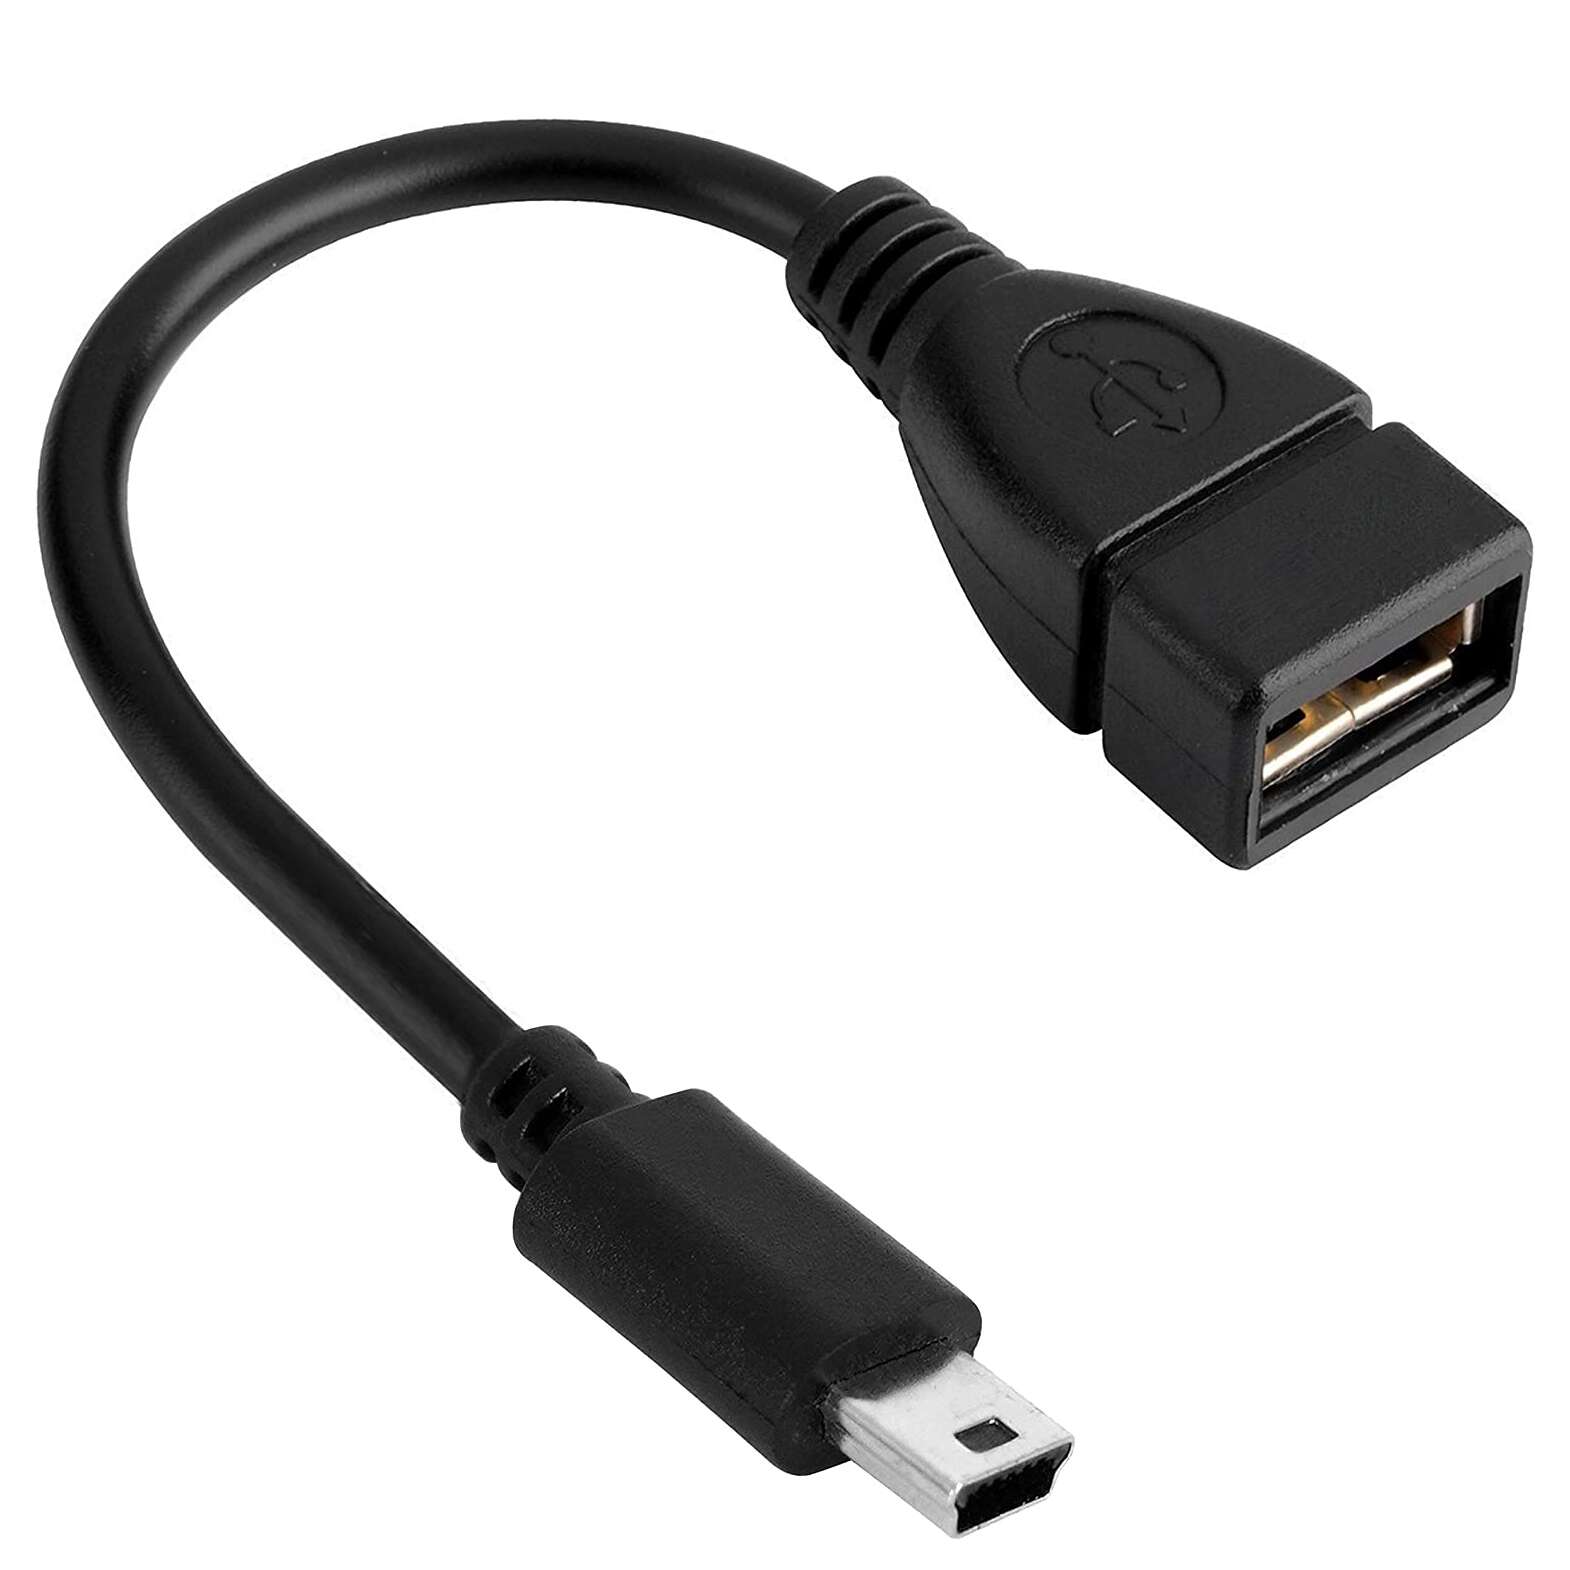 Micro USB Female to Mini USB Male Plug Adapter Connector Cable